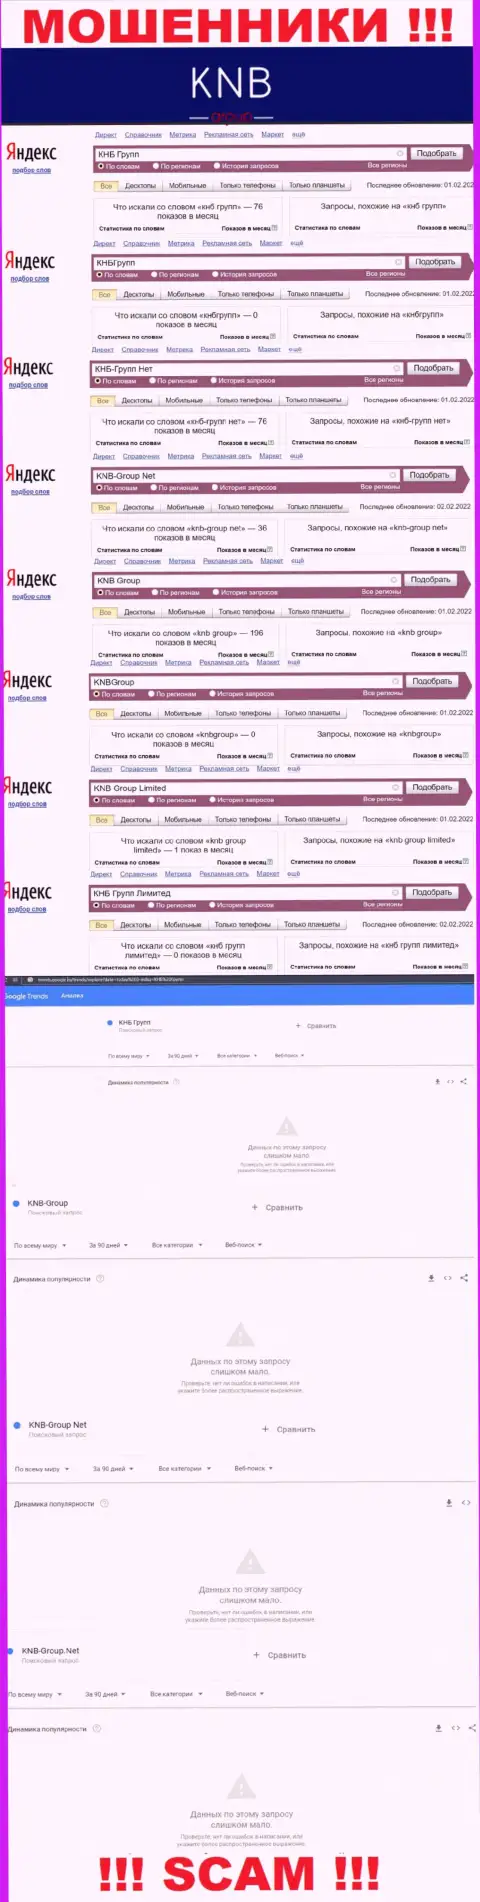 Скриншот результата онлайн запросов по преступно действующей компании KNB-Group Net